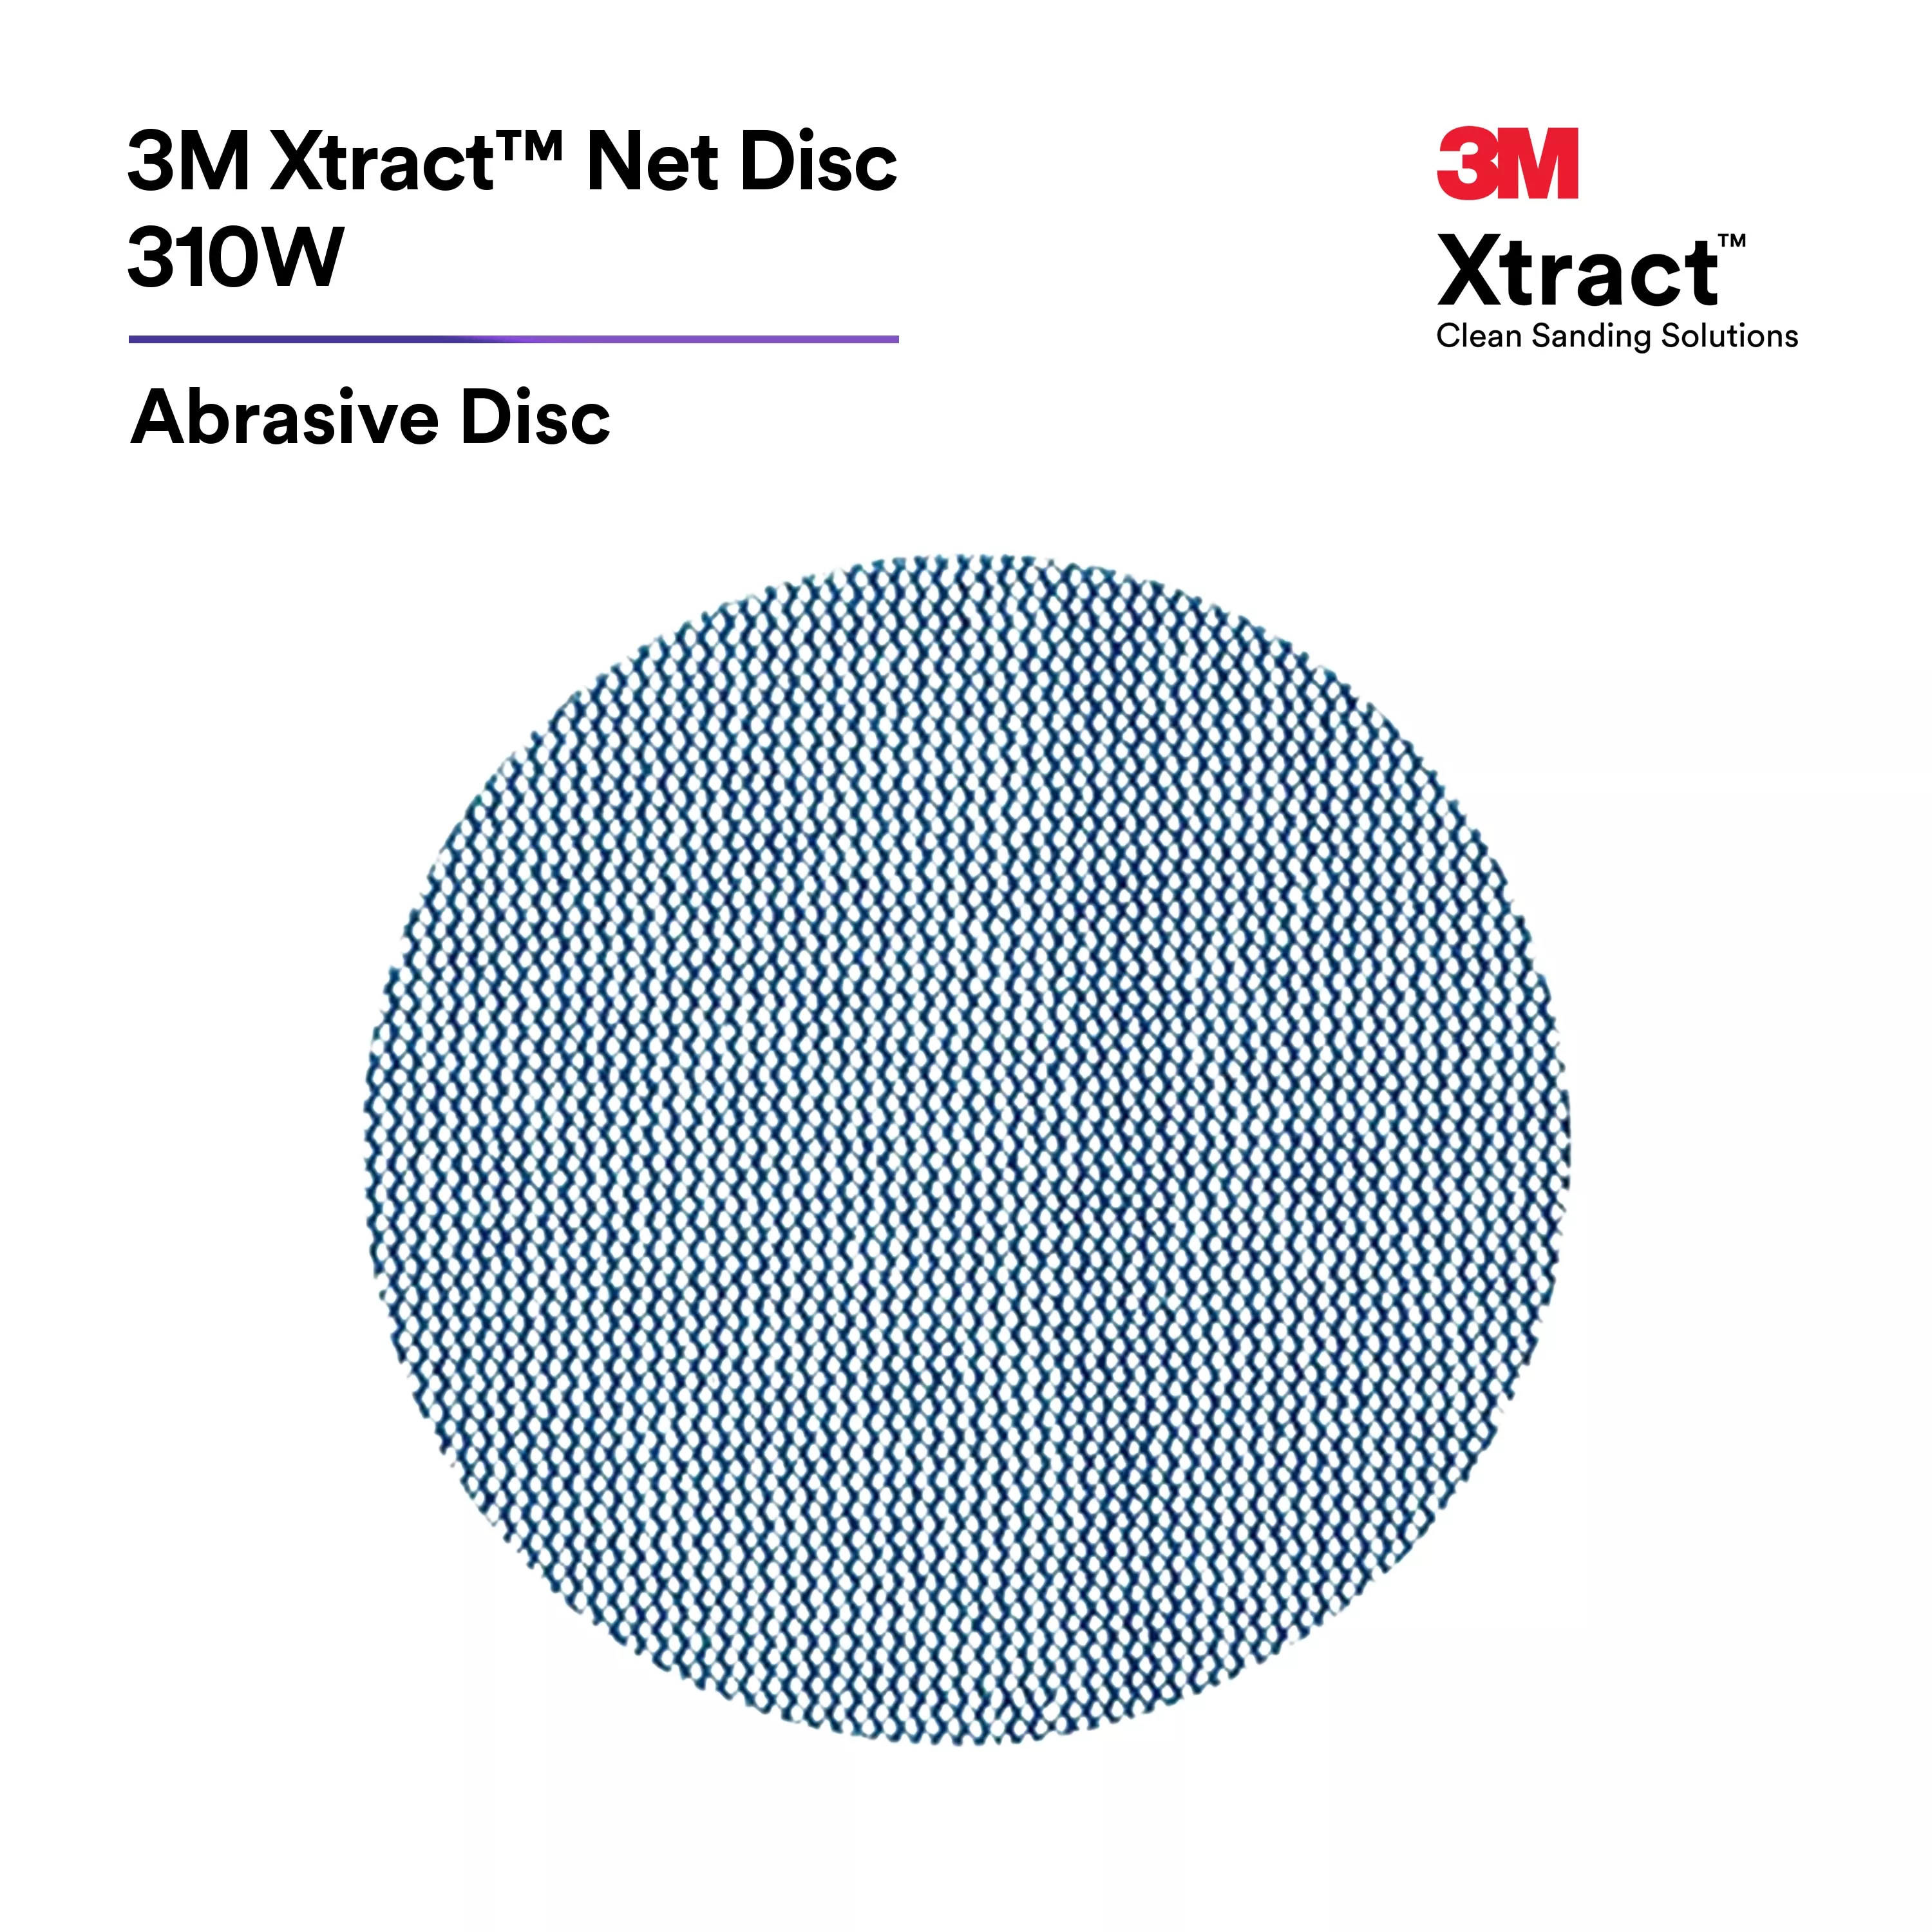 SKU 7100252817 | 3M Xtract™ Net Disc 310W